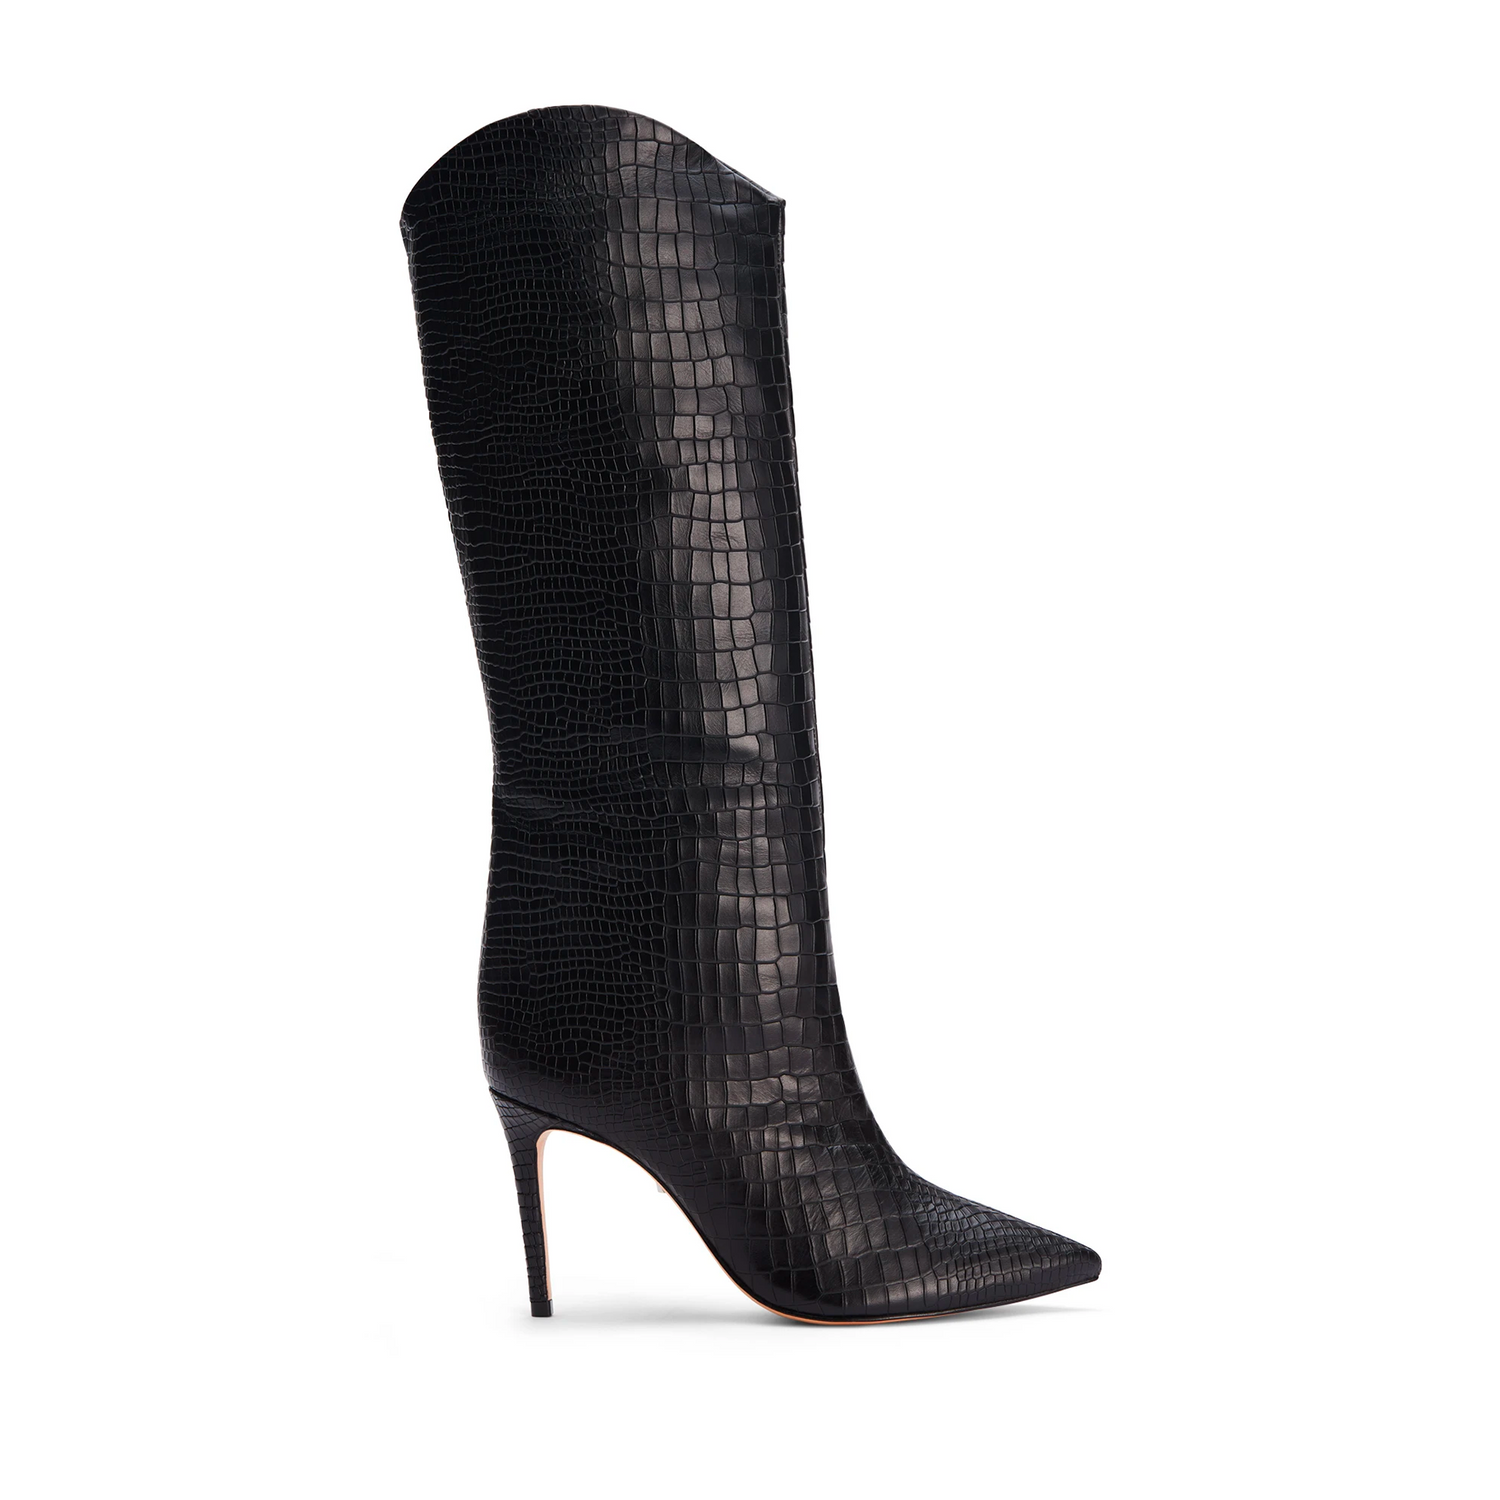 Schutz Maryana Black - Black Leather Boots - Croc-Embossed Boots